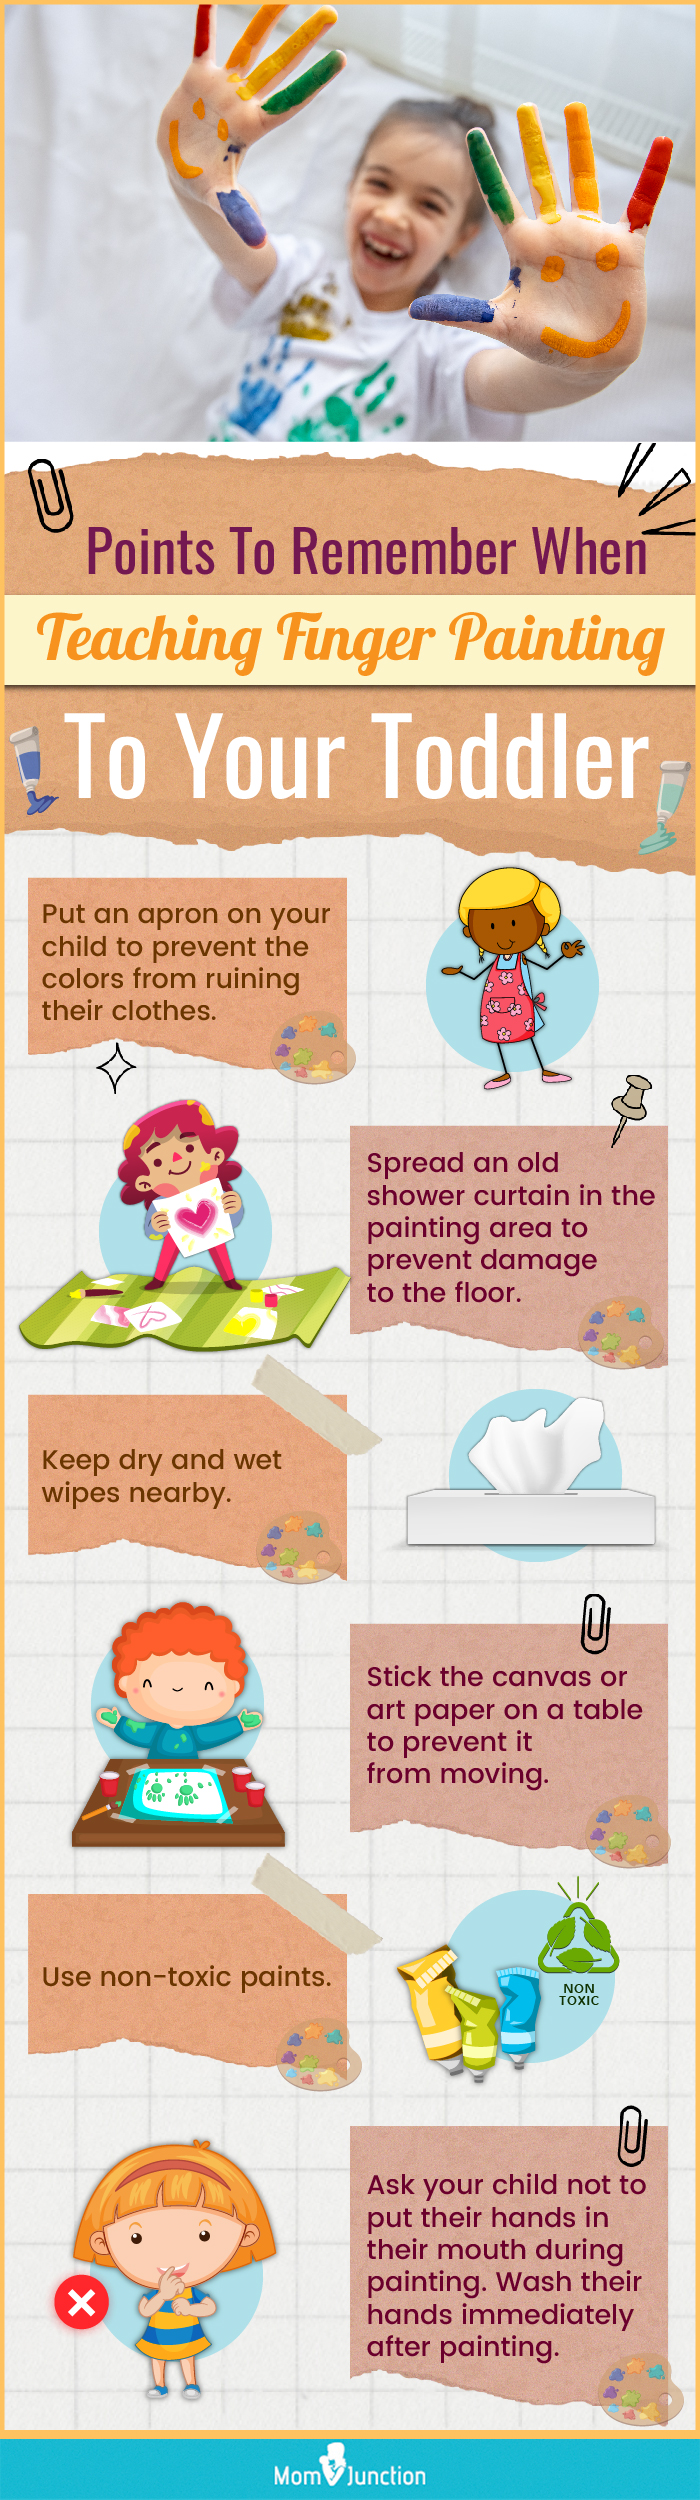 5 Benefits of Toddler Painting - Helenmorintc - Medium